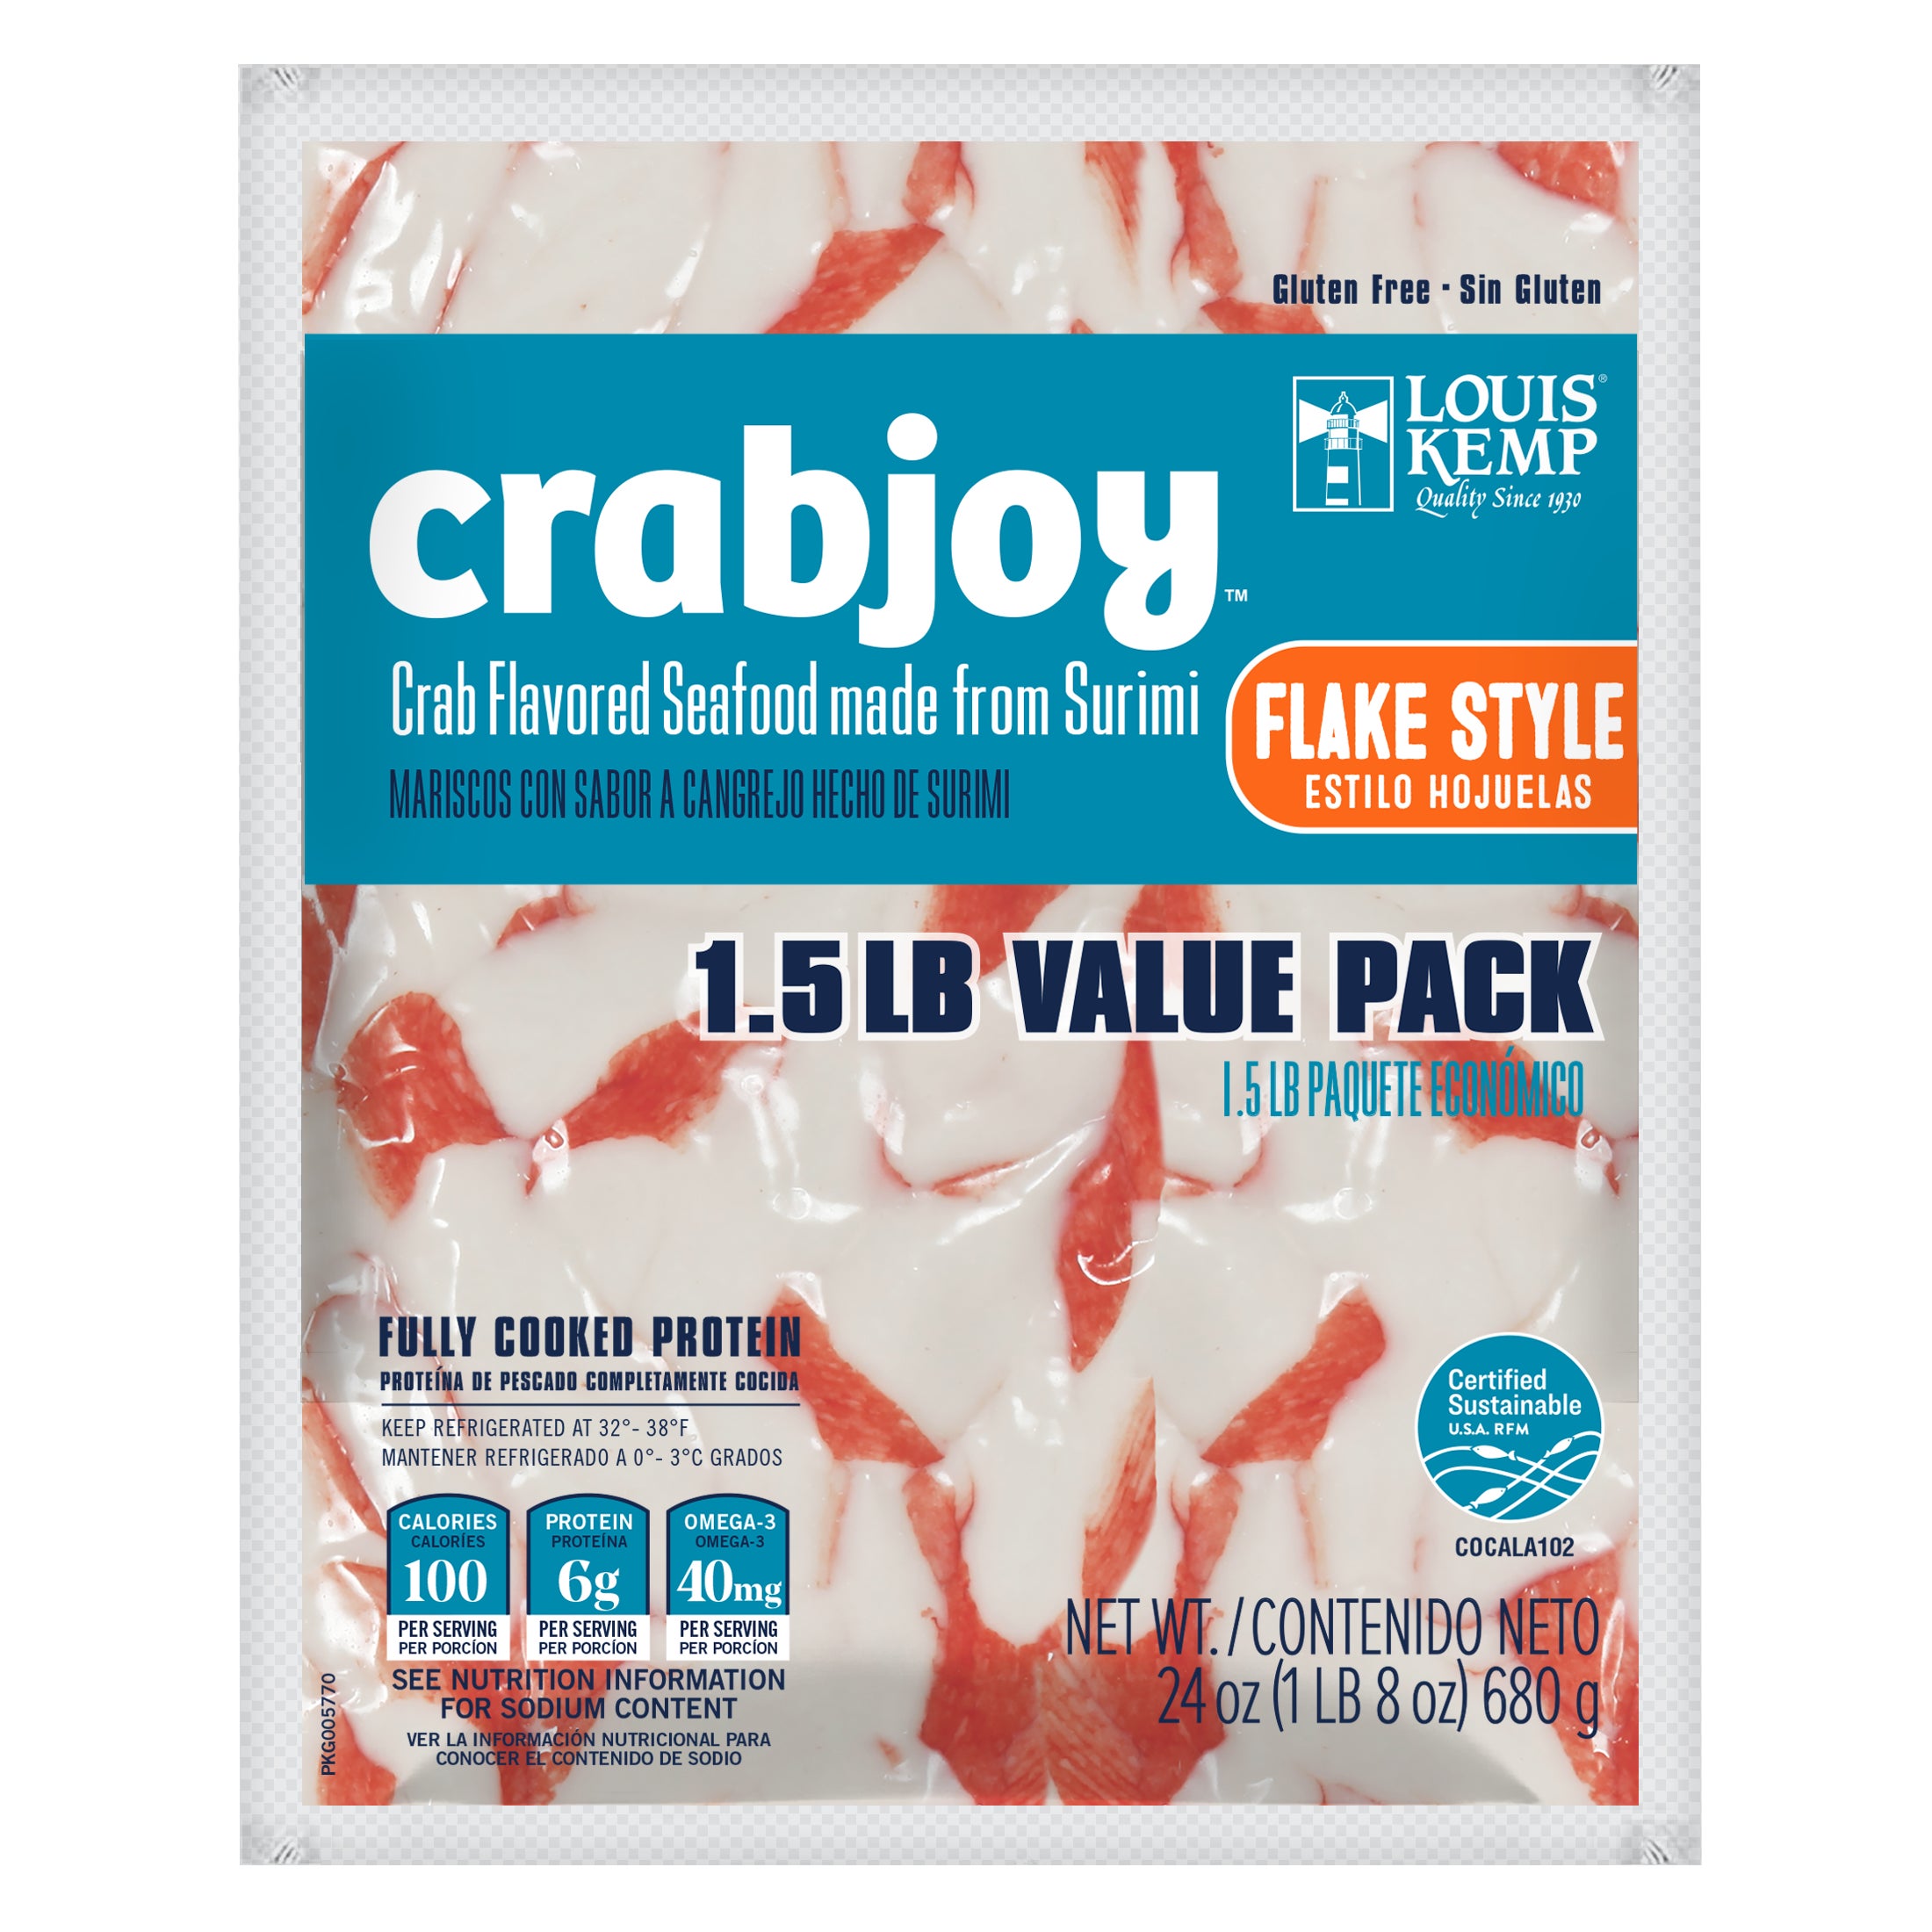 Crabjoy Flake Style slide 0